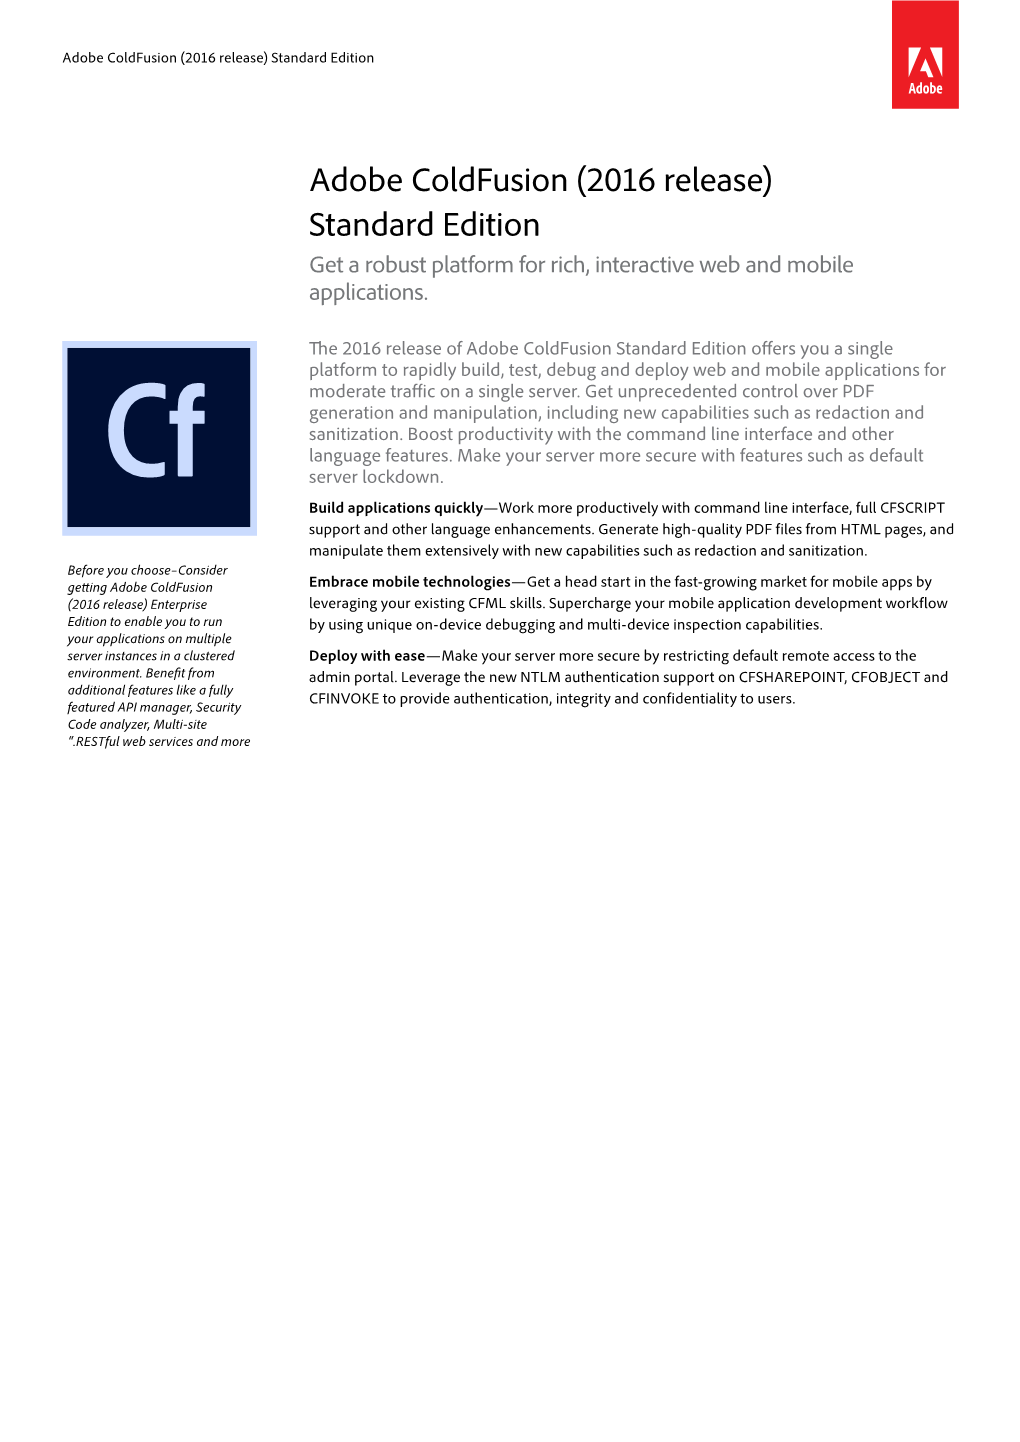 Adobe Coldfusion (2016 Release) Standard Edition